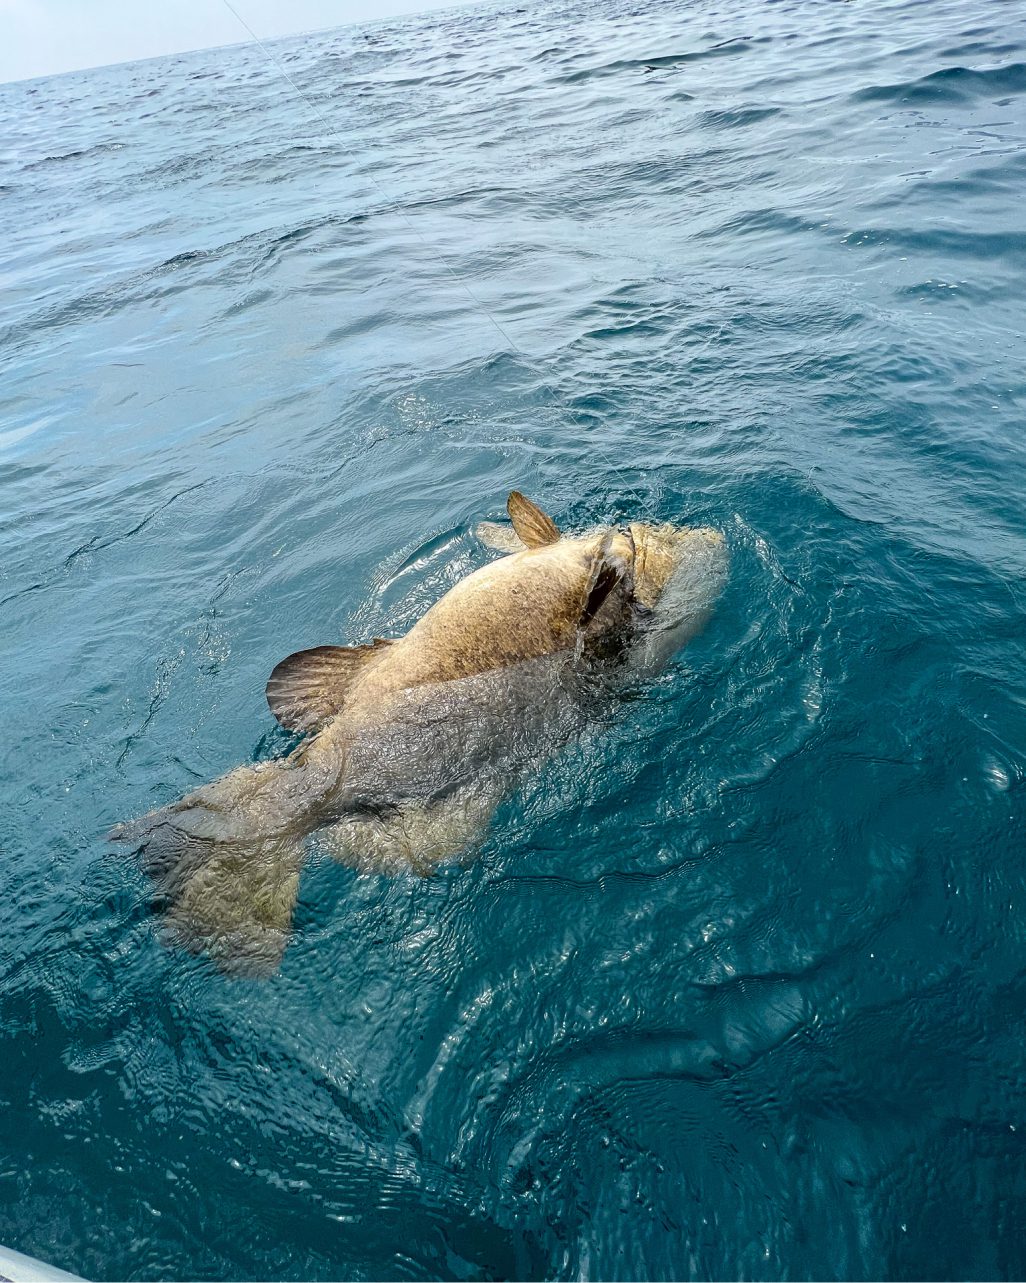 Atlantic Goliath Grouper caught in a fishing line.